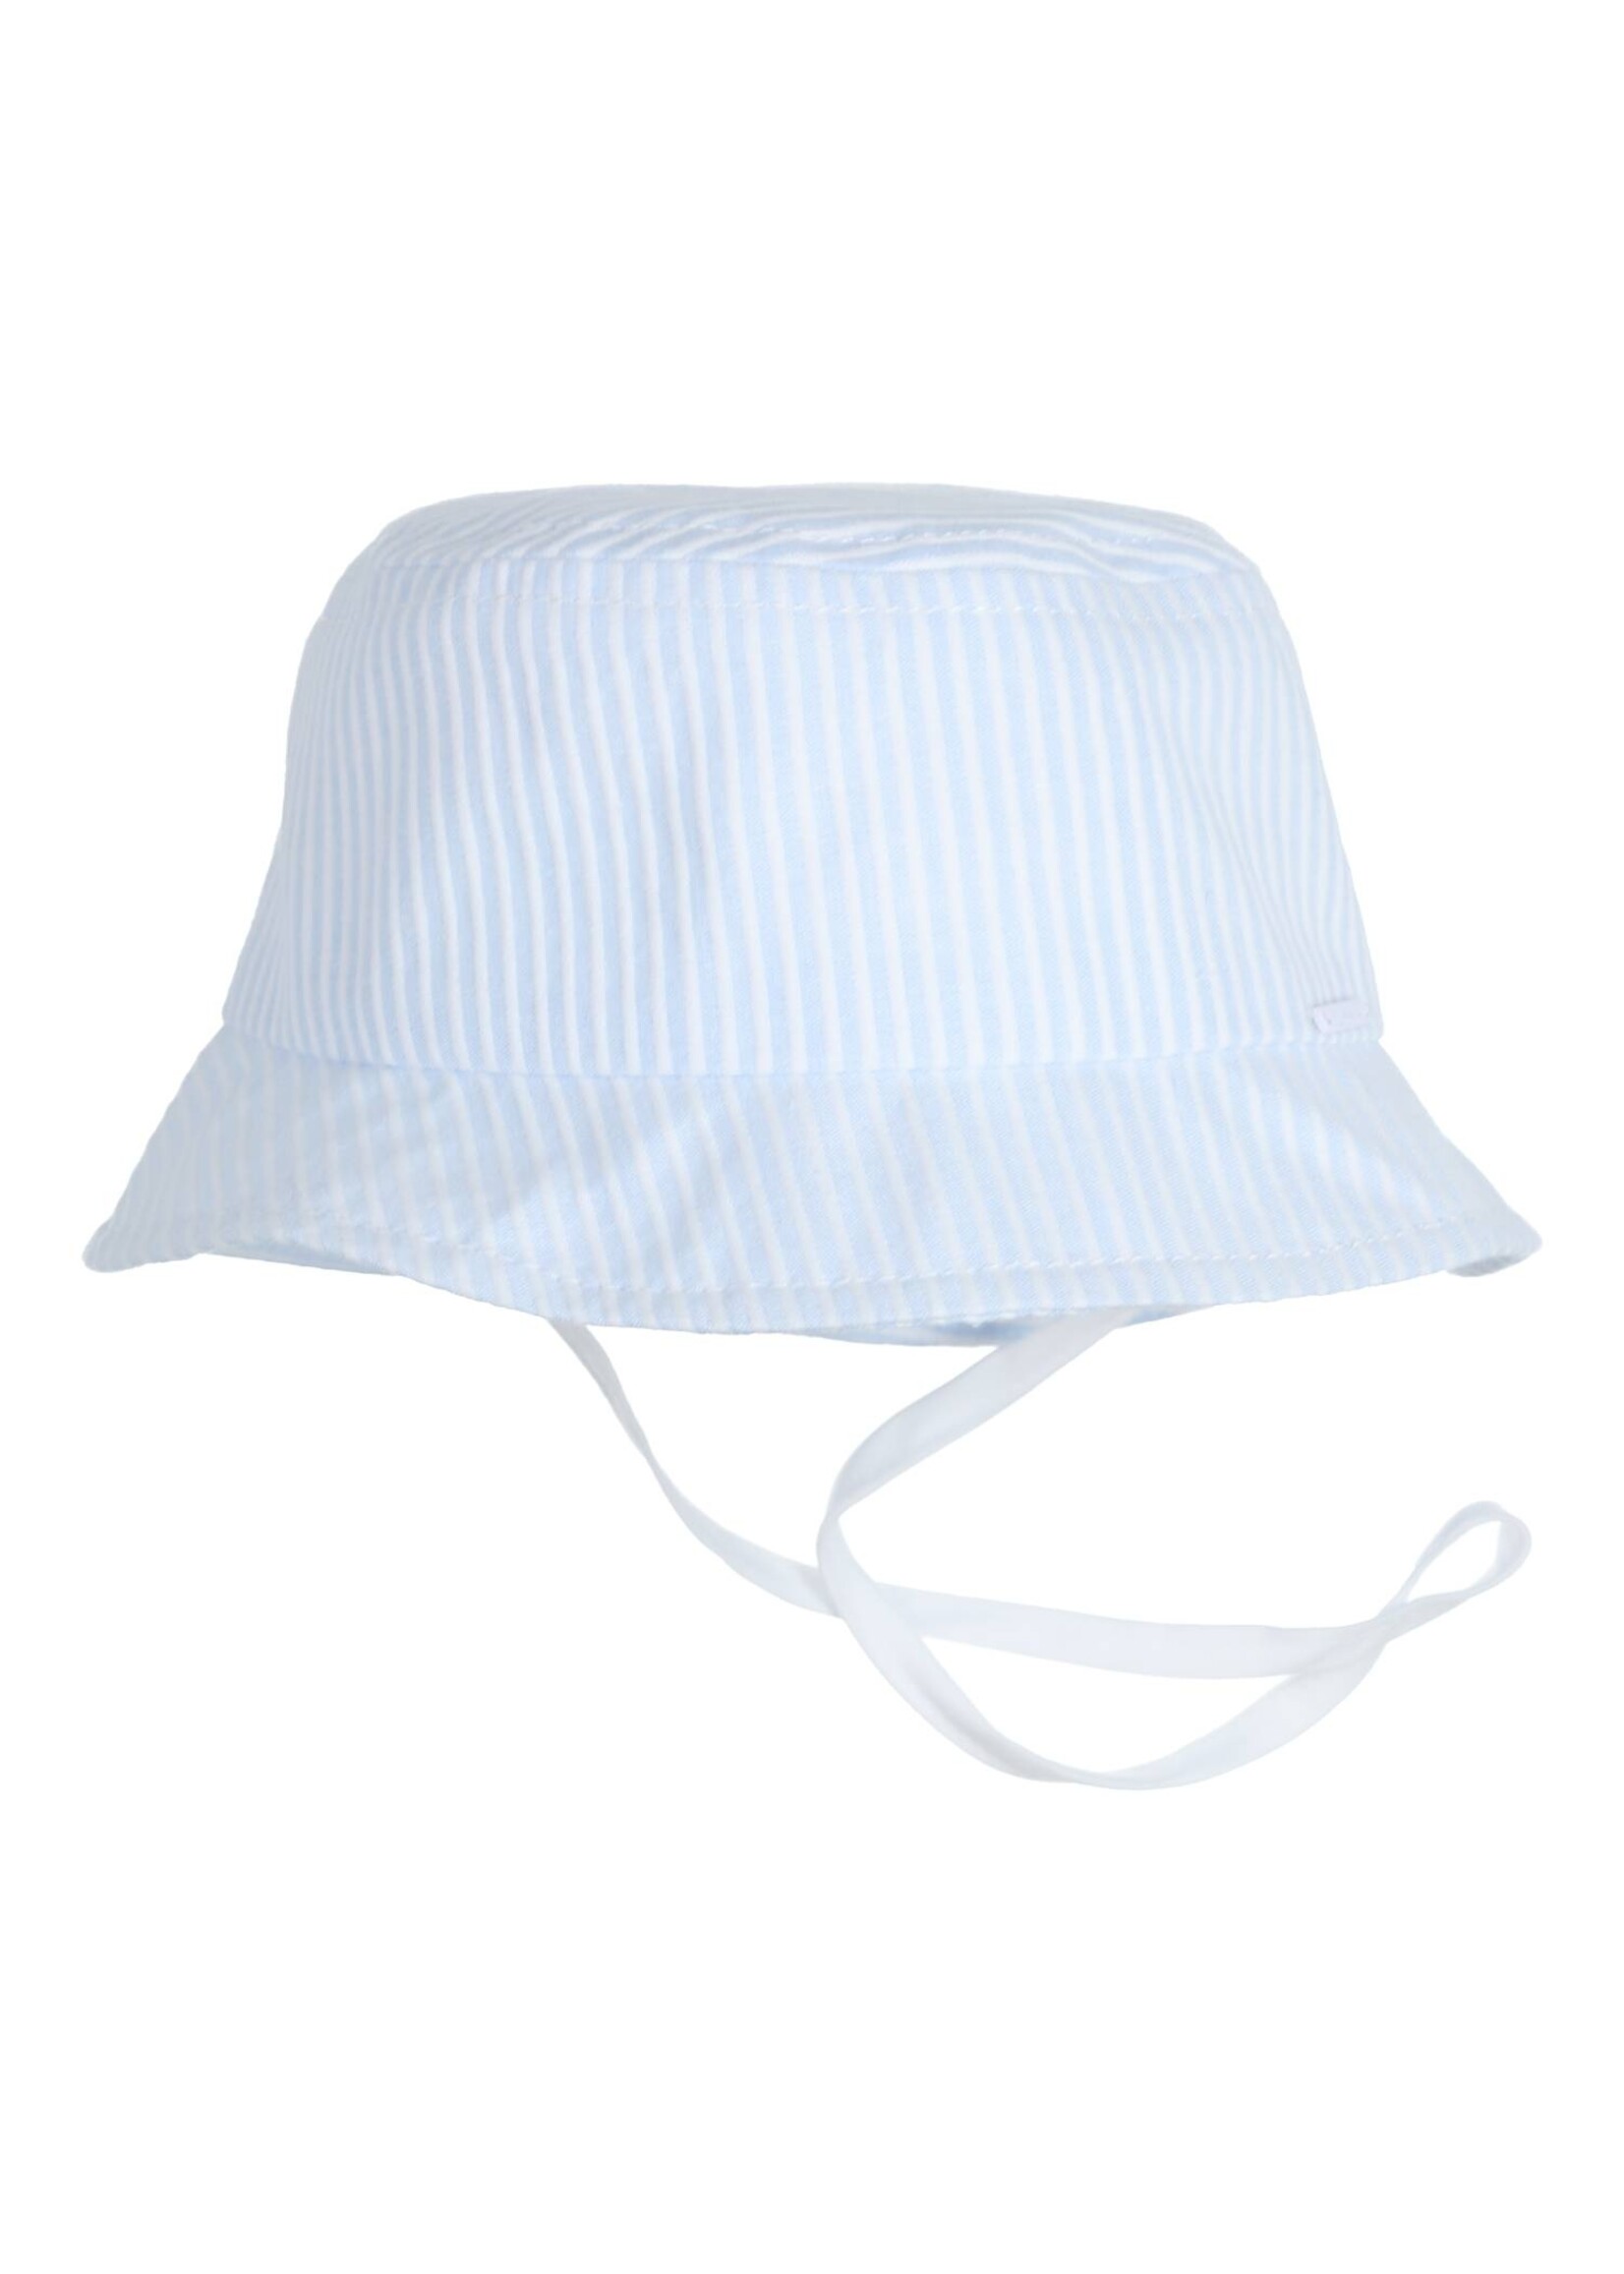 Gymp Boys Hat Raya 450-4246-20 Light Blue - White